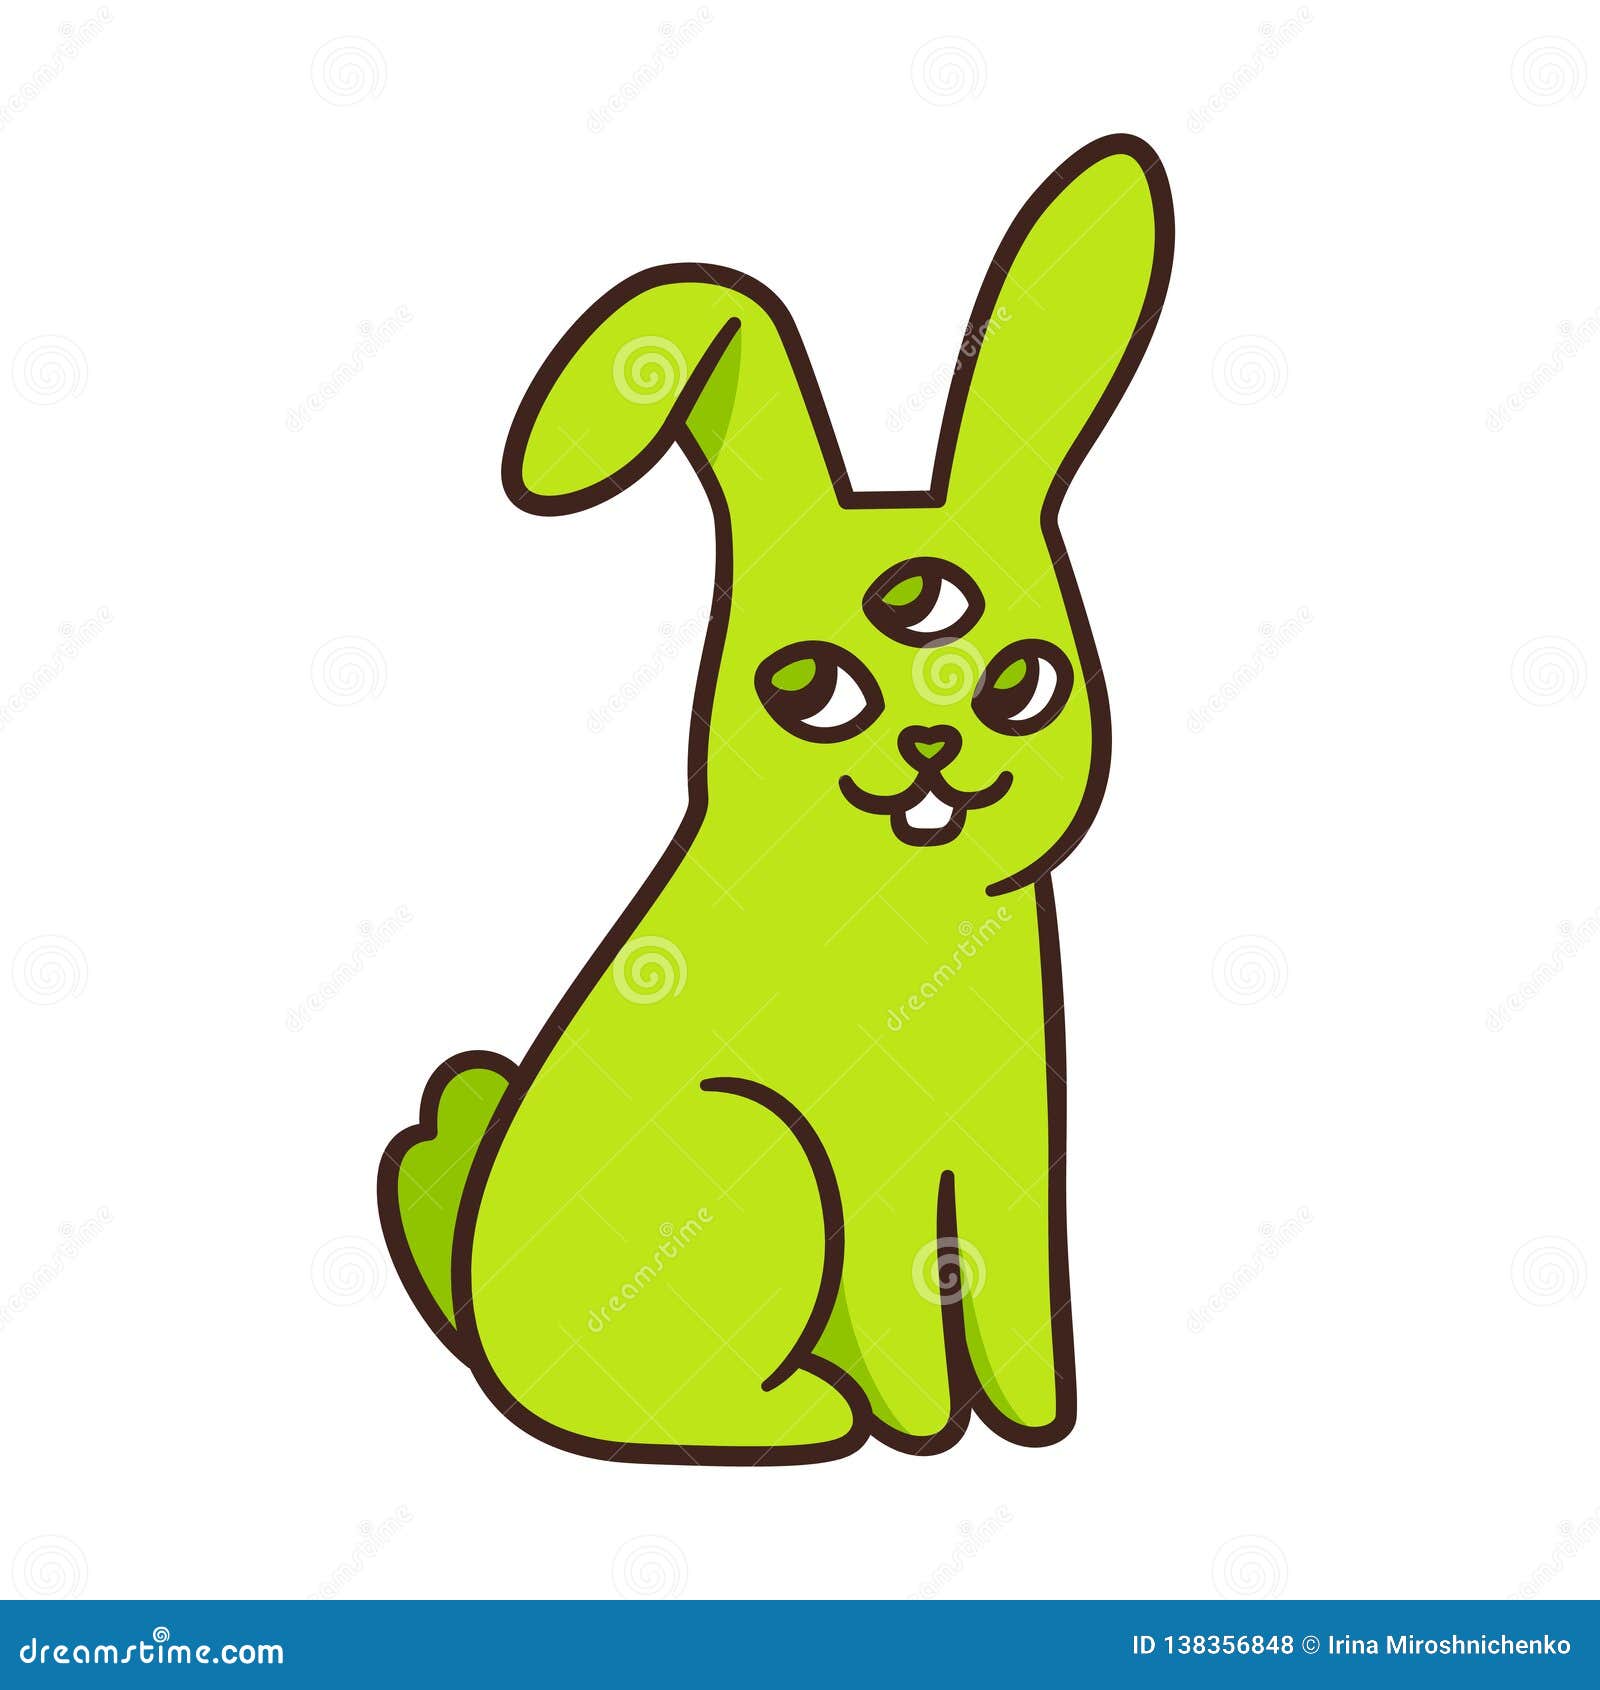 Funny alien mutant rabbit stock vector. Illustration of bizarre - 138356848